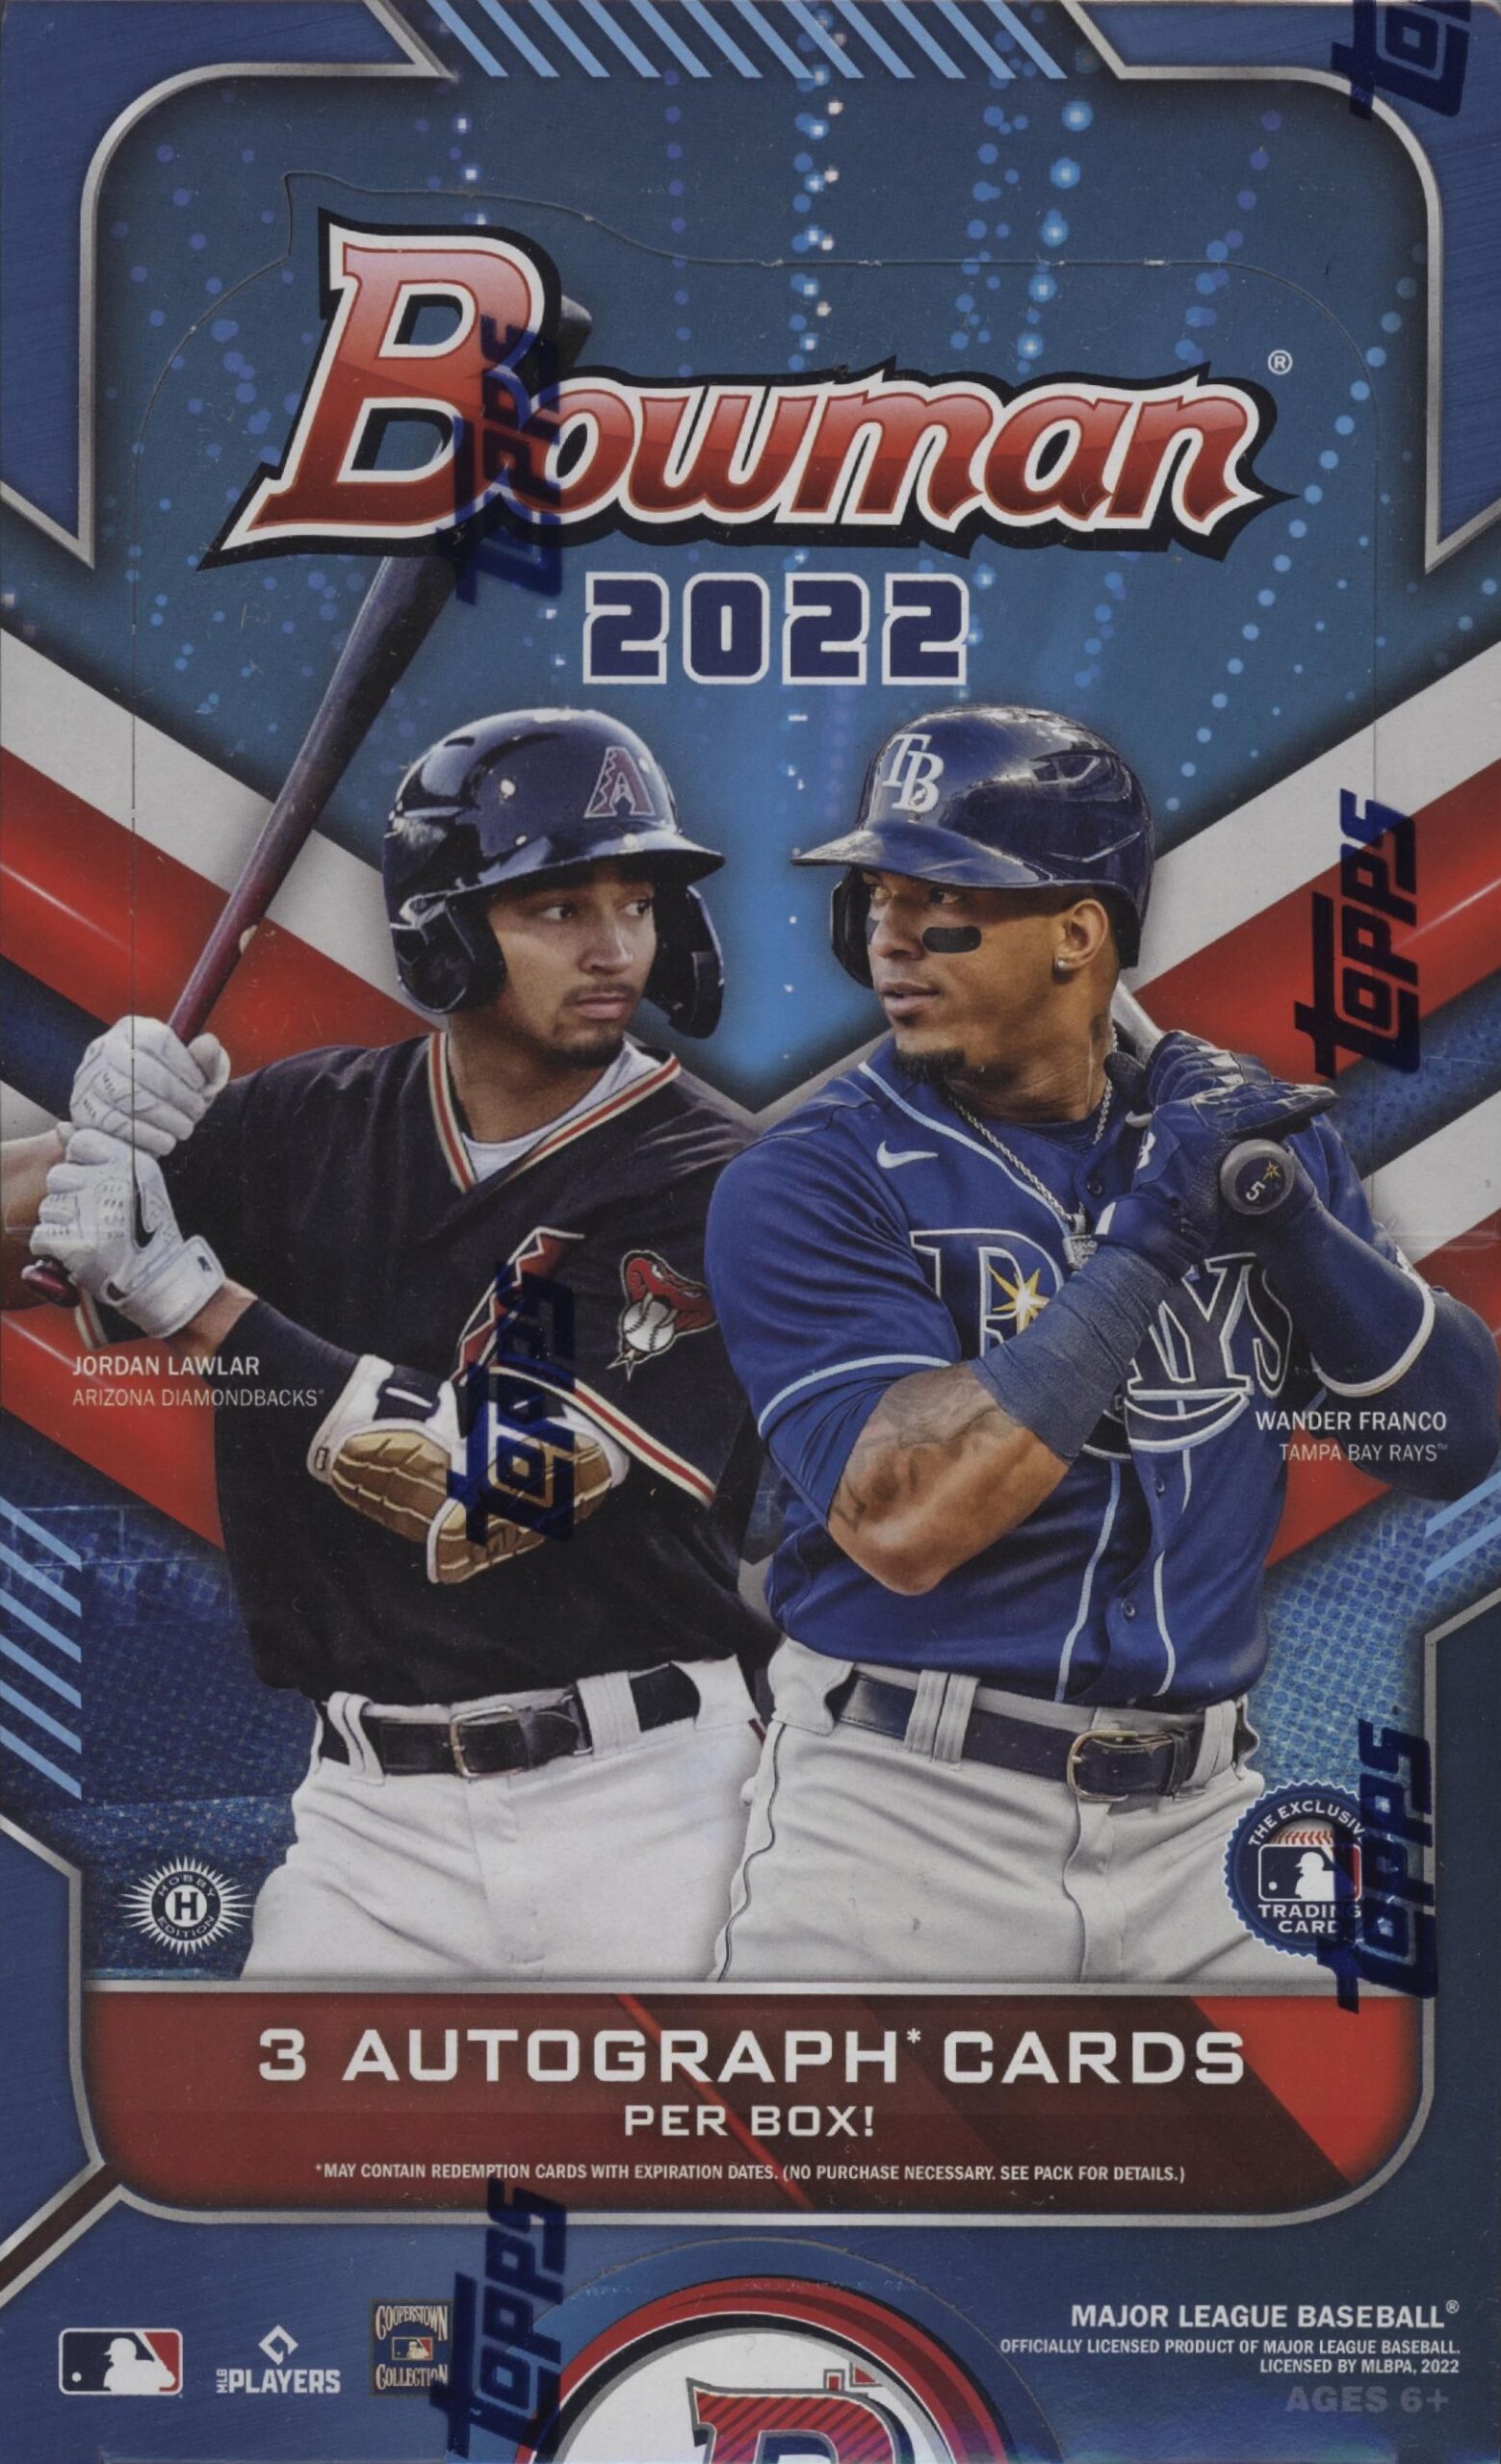 ⚾ MLB 2022 TOPPS BOWMAN BASEBALL JUMBO【製品情報】 | Trading Card 